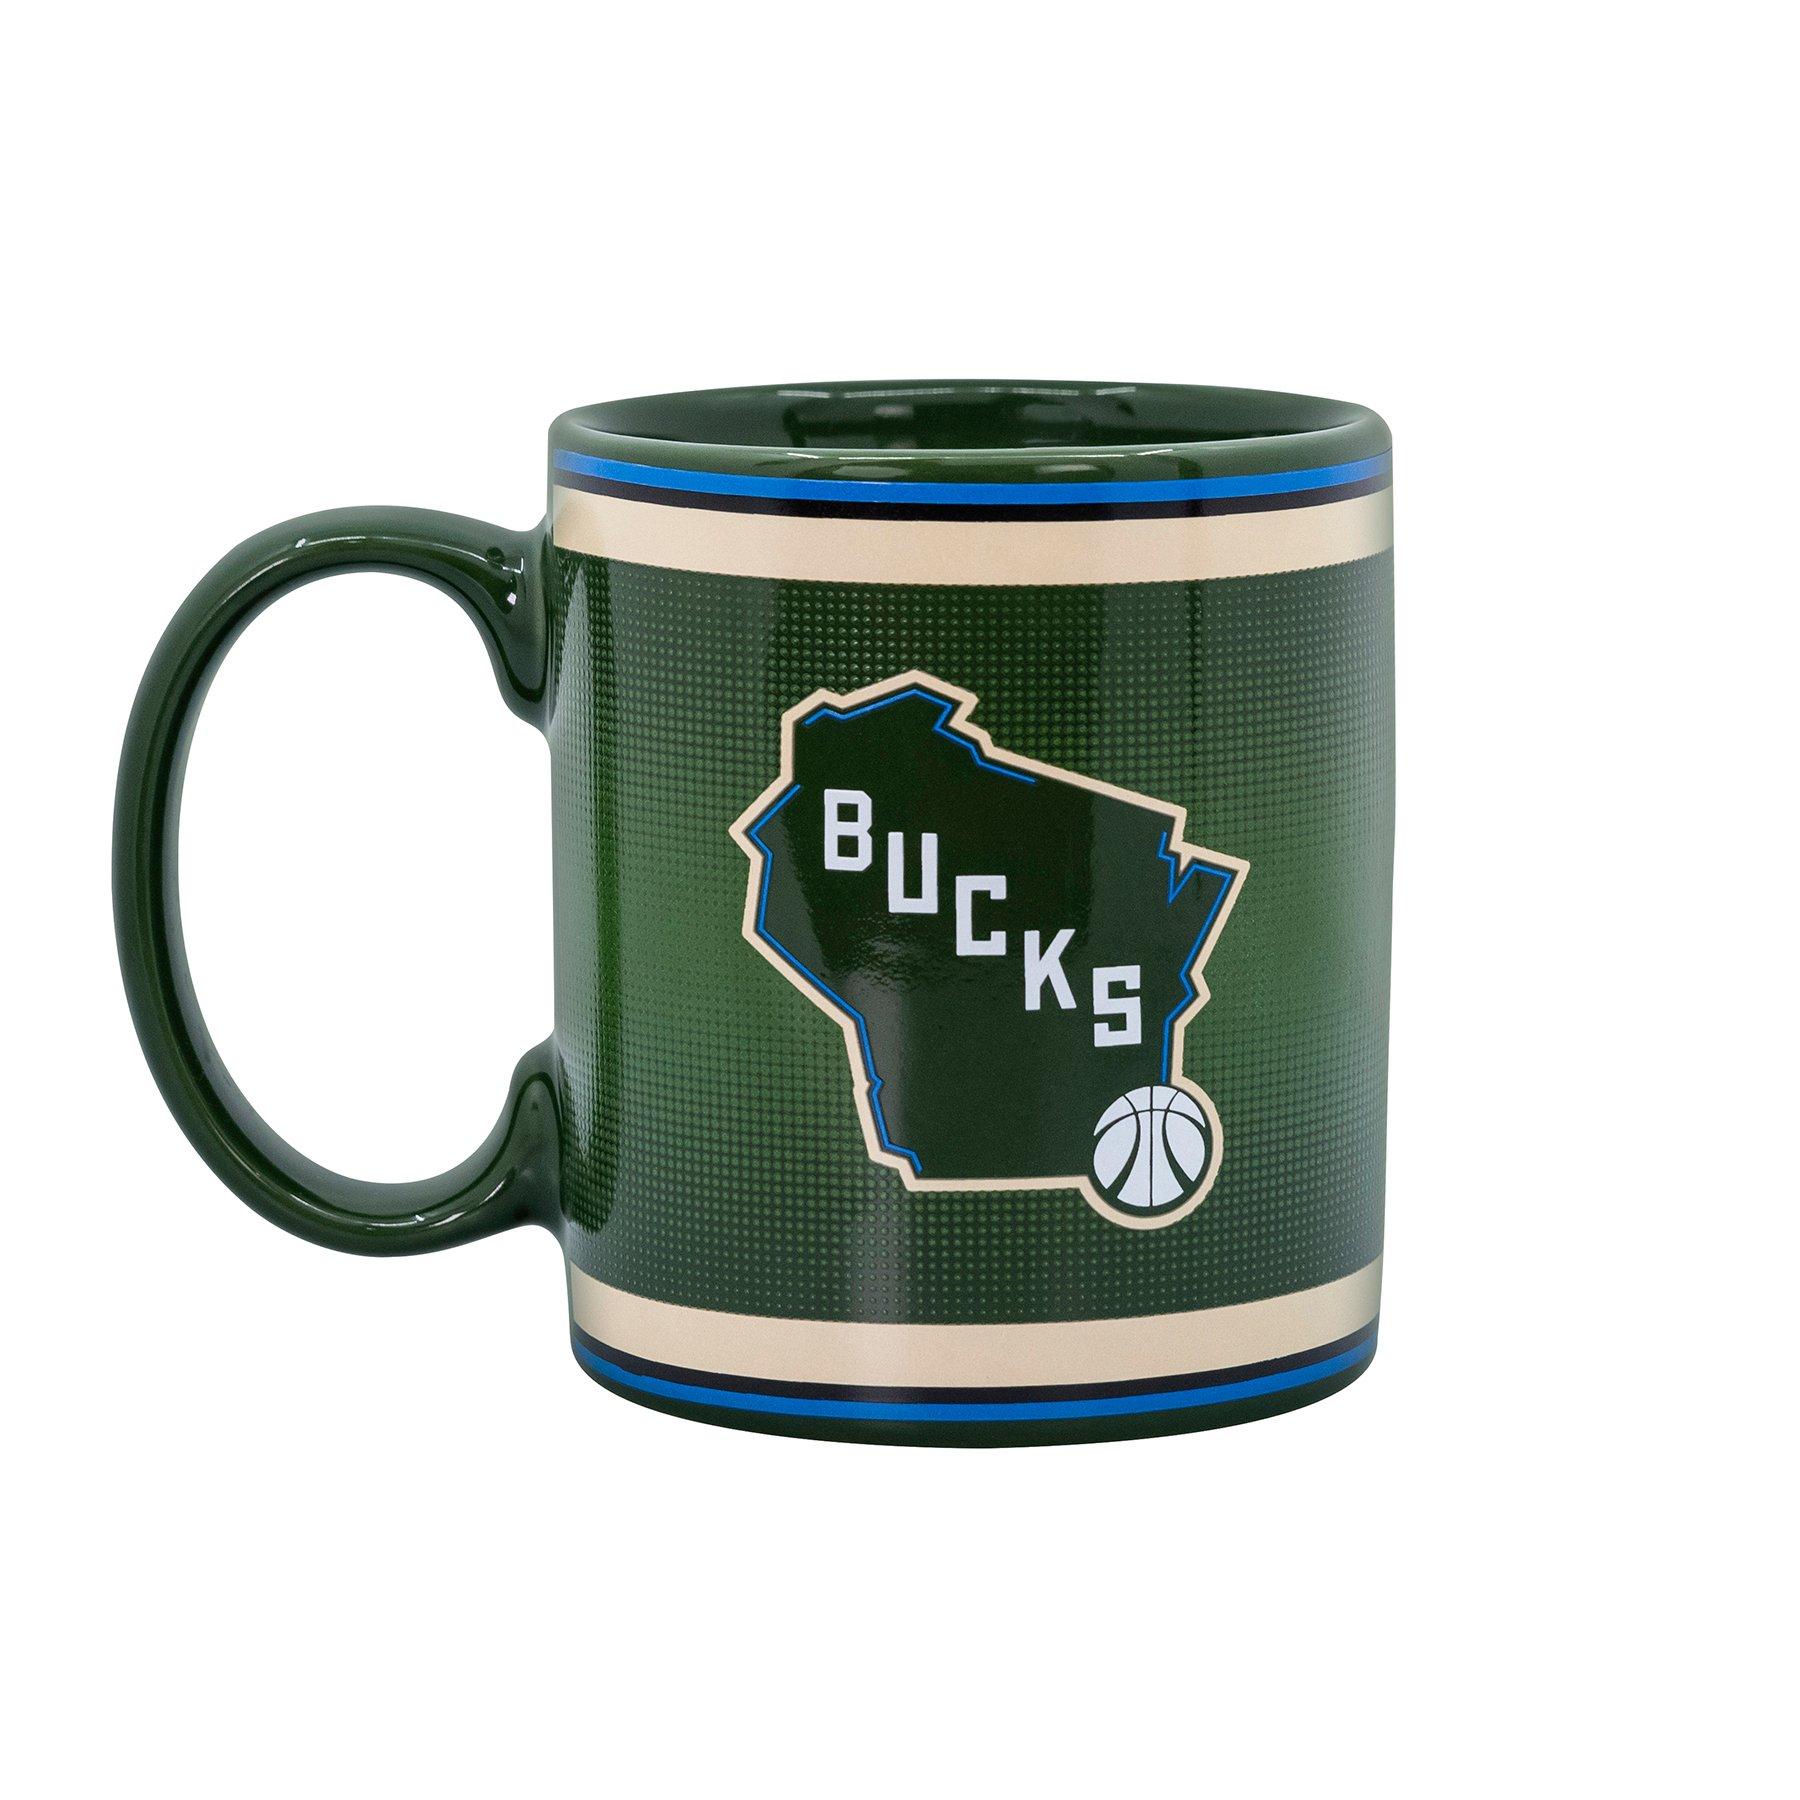 https://media.gamestop.com/i/gamestop/20005672_ALT02/Milwaukee-Bucks-Logo-Mug-Warmer-with-Mug?$pdp$